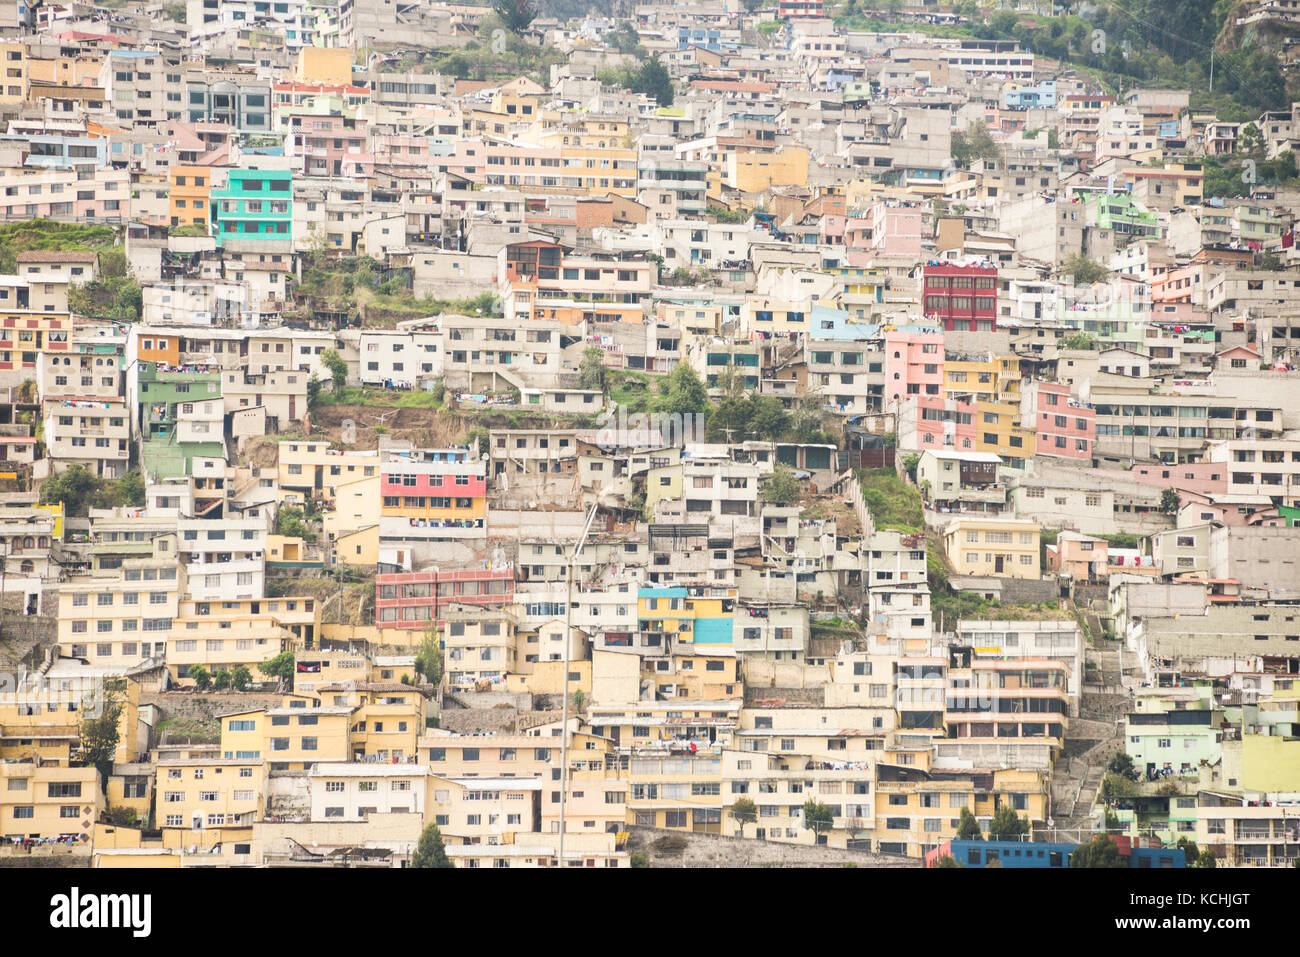 A hillside of houses in Quito, Ecuador Stock Photo